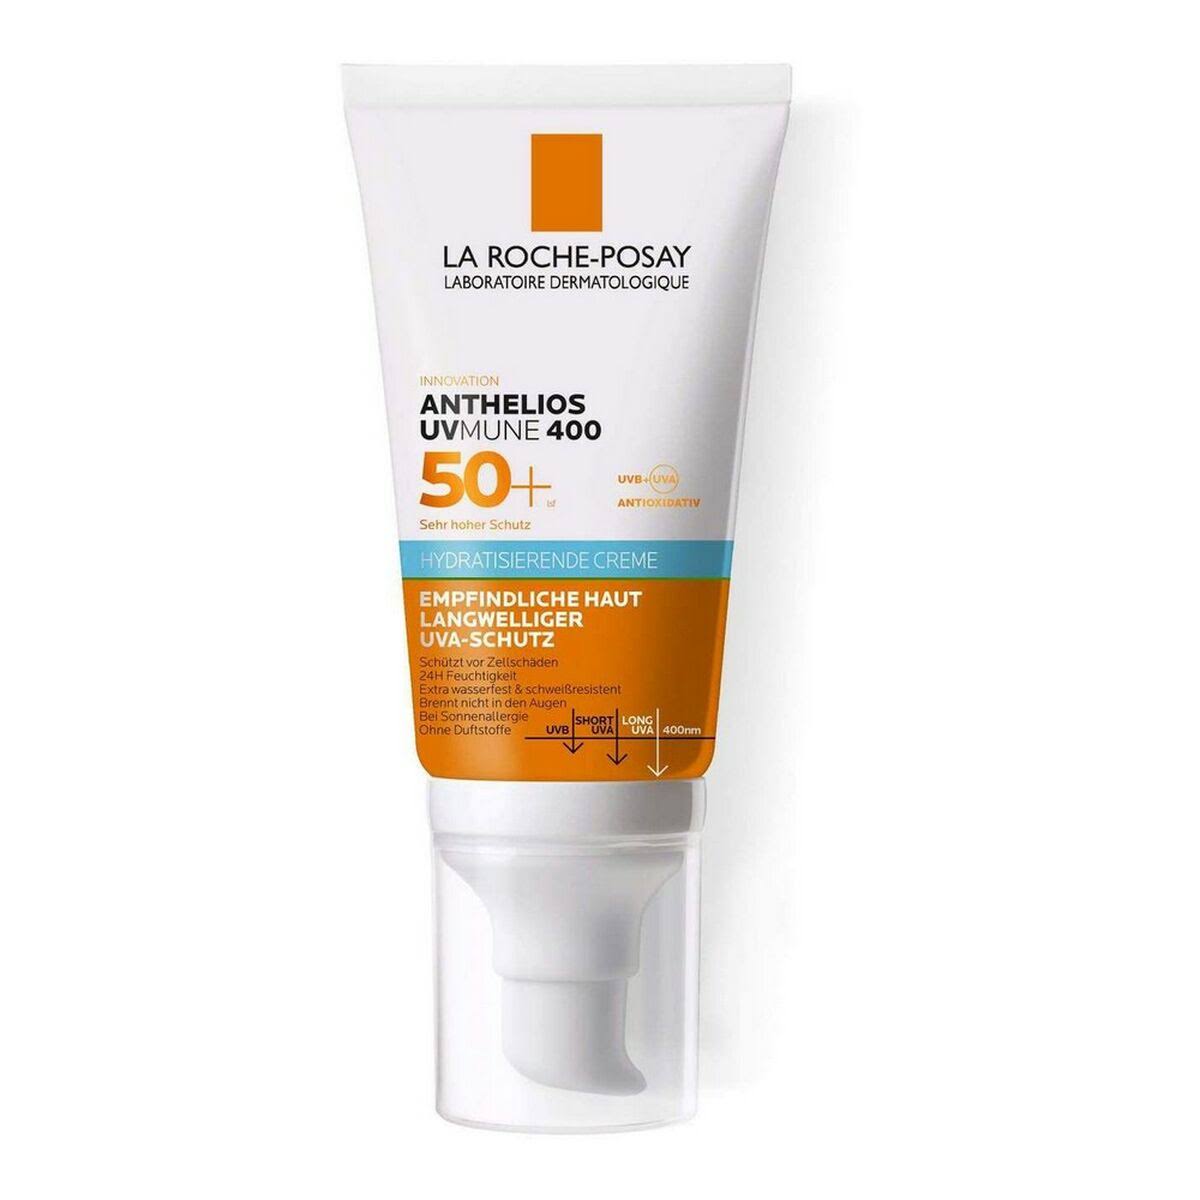 La Roche Posay Anthelios UVMUNE 400 Hydrating Cream 50ml | SPF50+